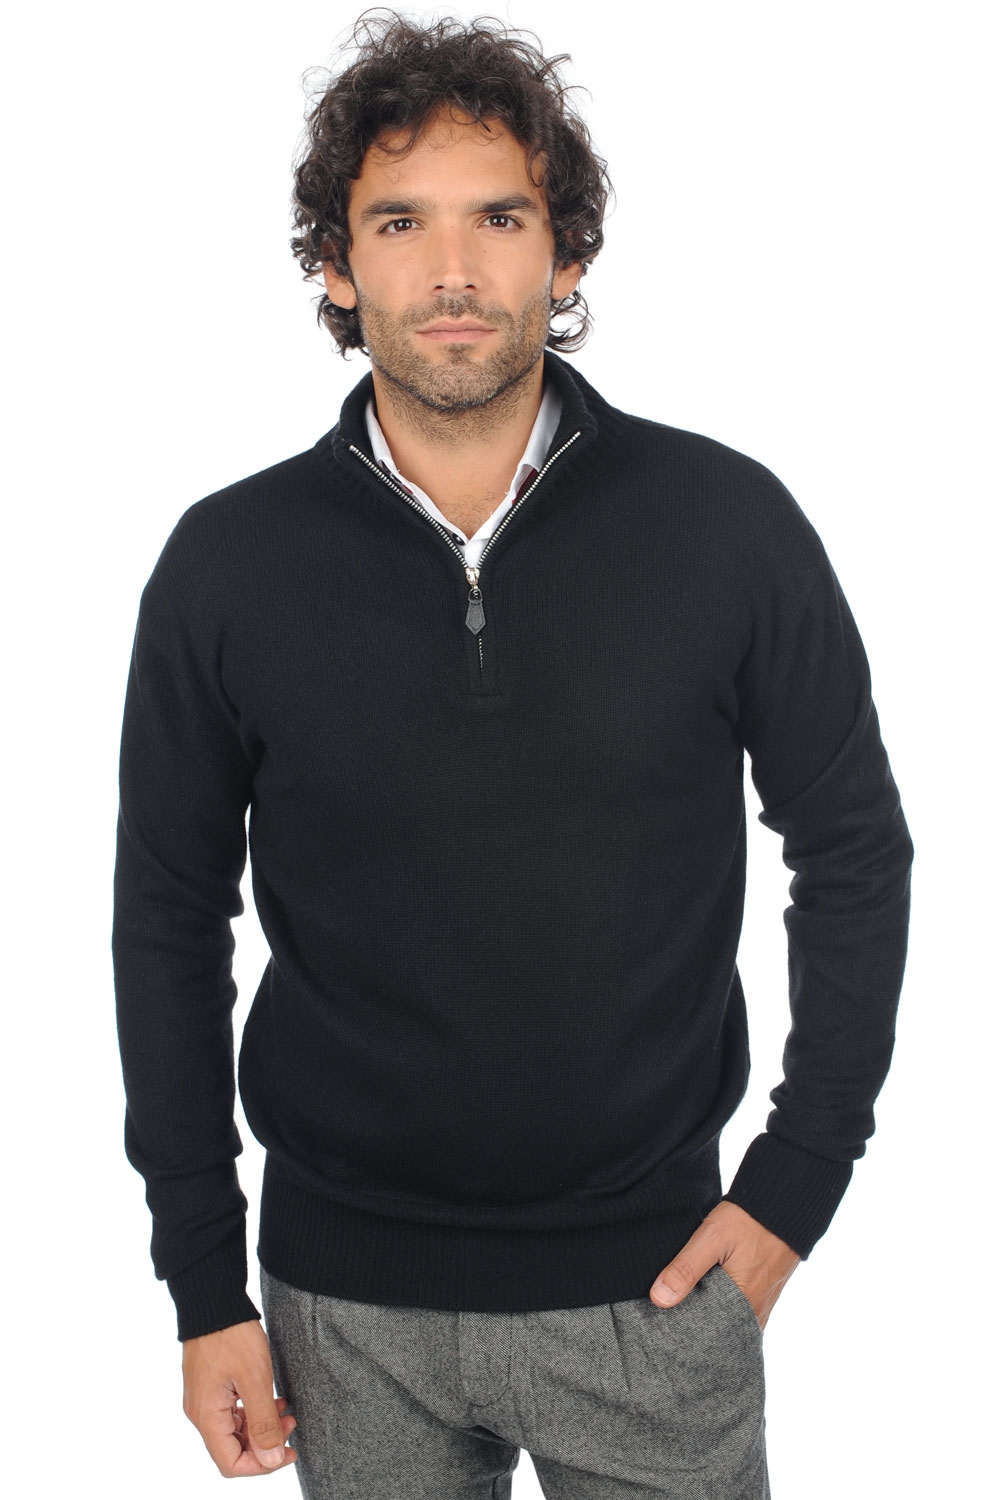 Cashmere men polo style sweaters donovan black xl